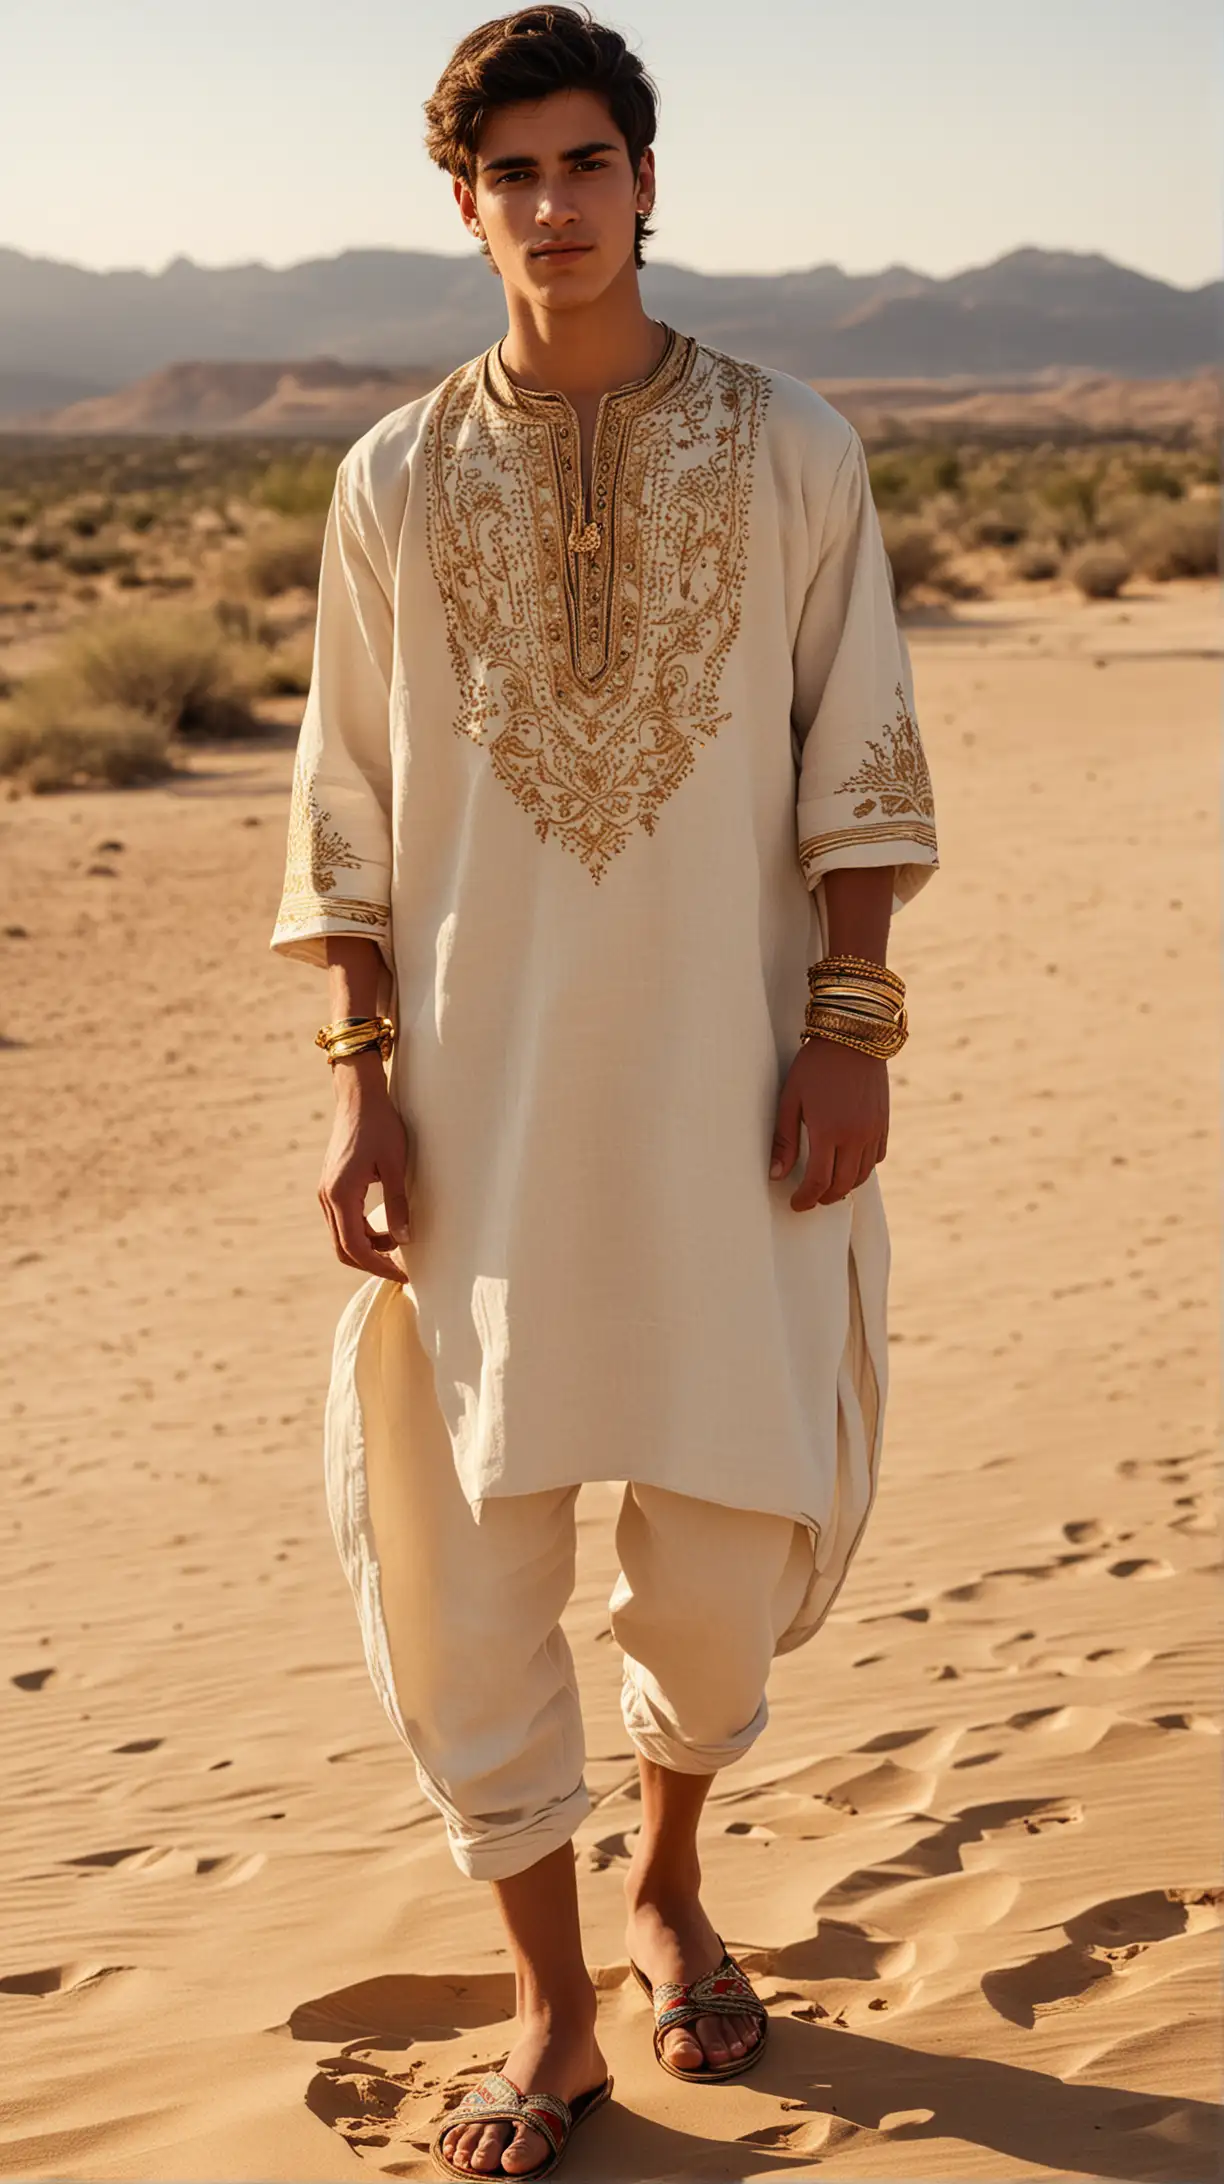 Young Man in Embroidered Linen Khaftan Standing in Desert Sunlight